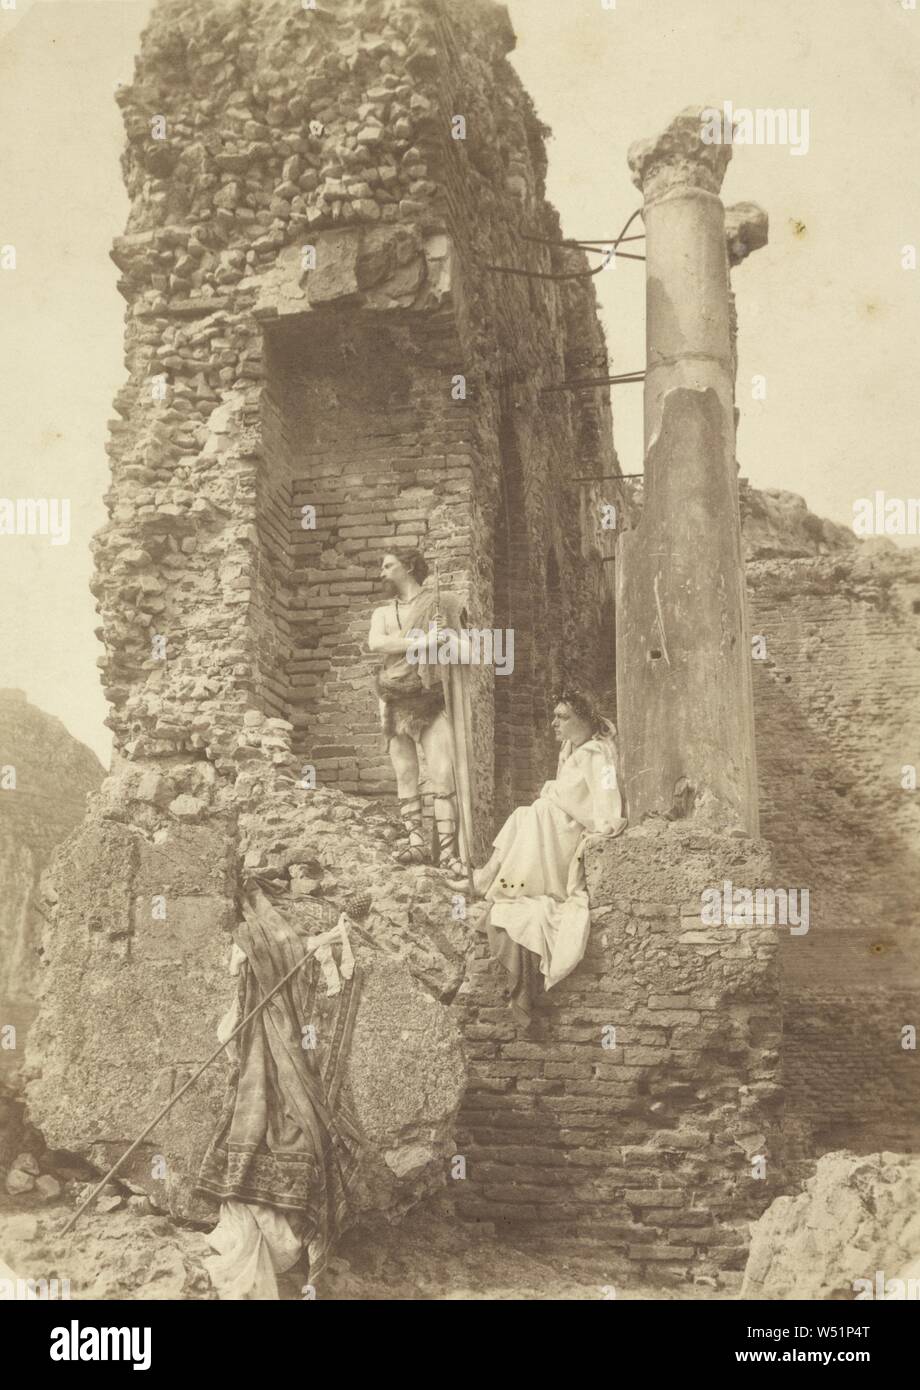 Two Men in costume near ruins, Baron Wilhelm von Gloeden (German, 1856 - 1931), Taormina, Sicily, Italy, 1903, Albumen silver print, 21.5 x 15.3 cm (8 7/16 x 6 in Stock Photo